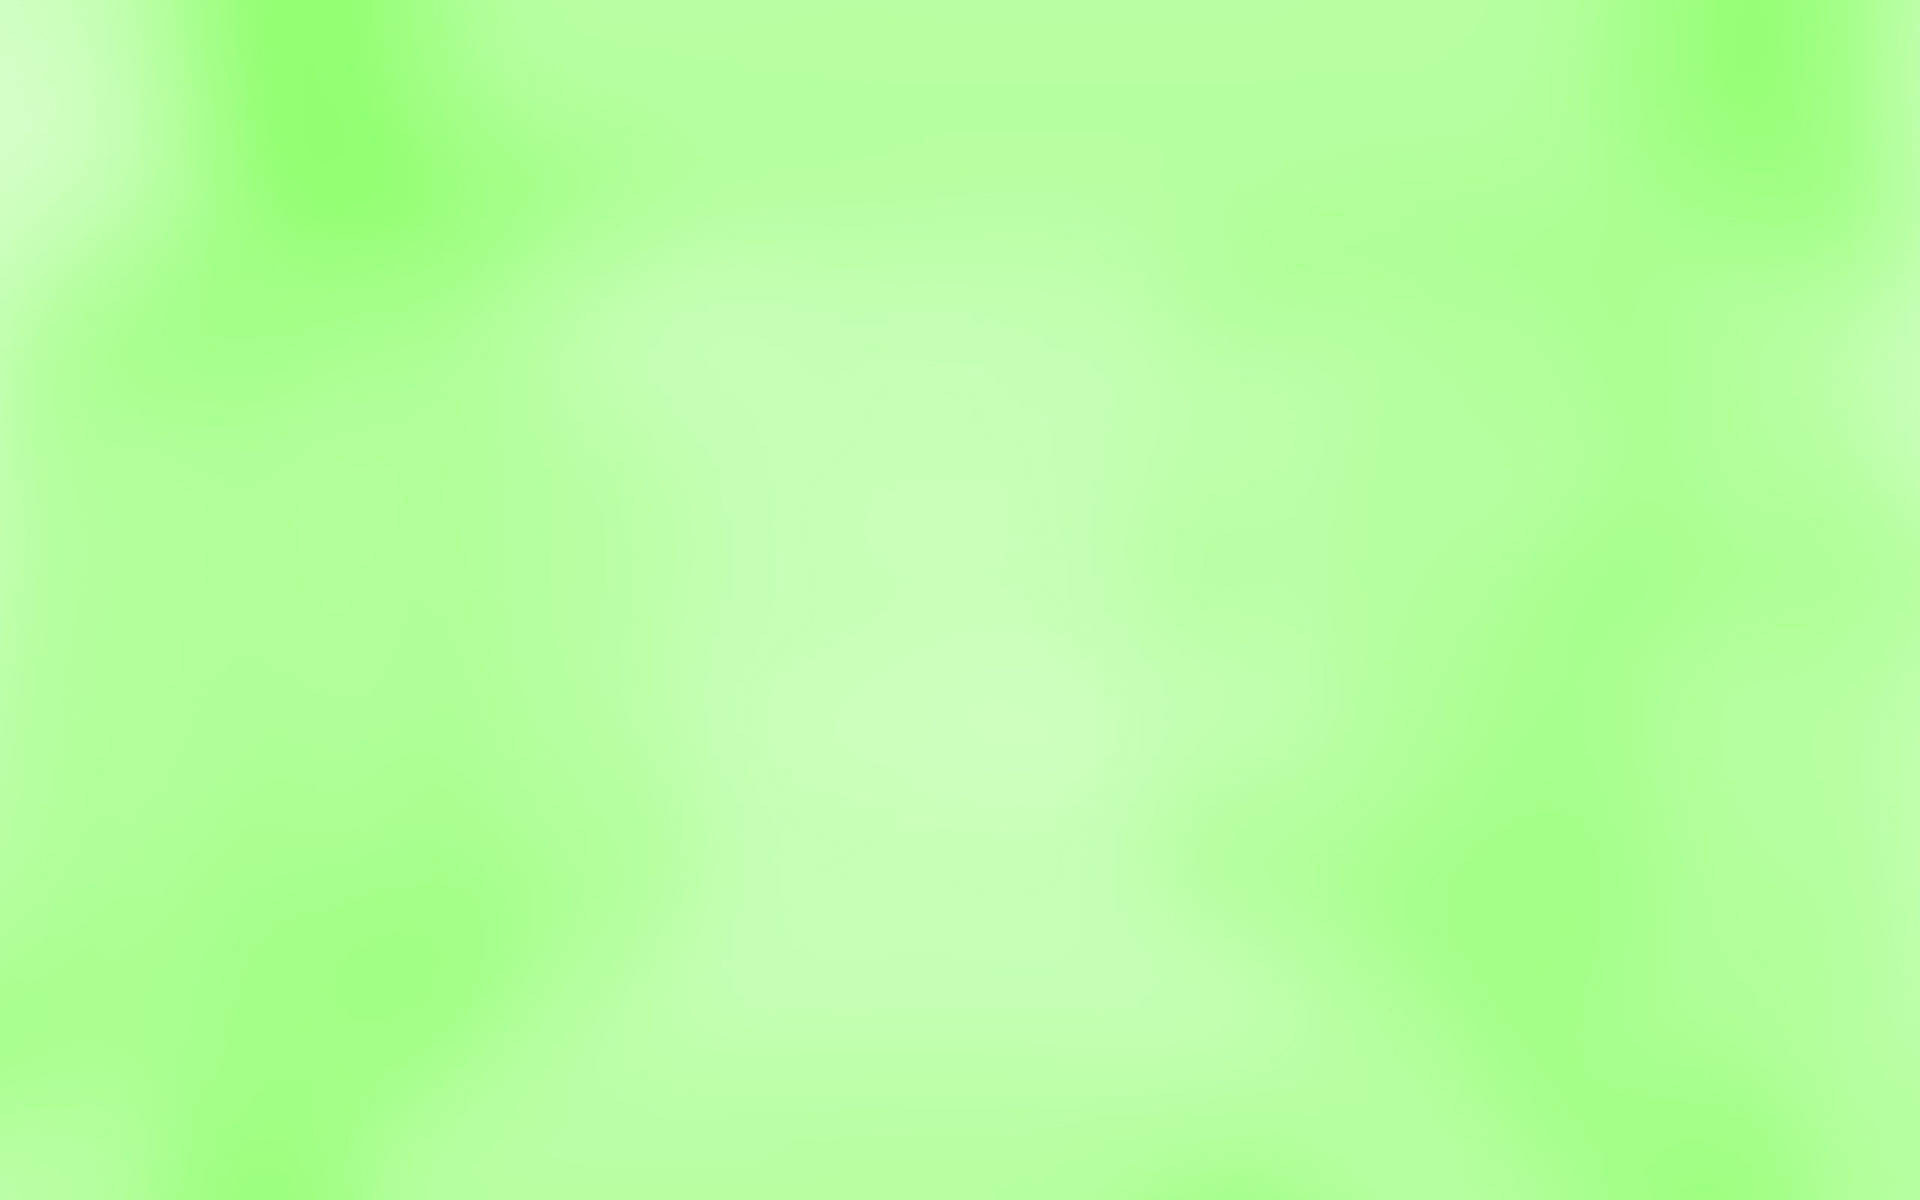 Dyed Light Green Plain Background